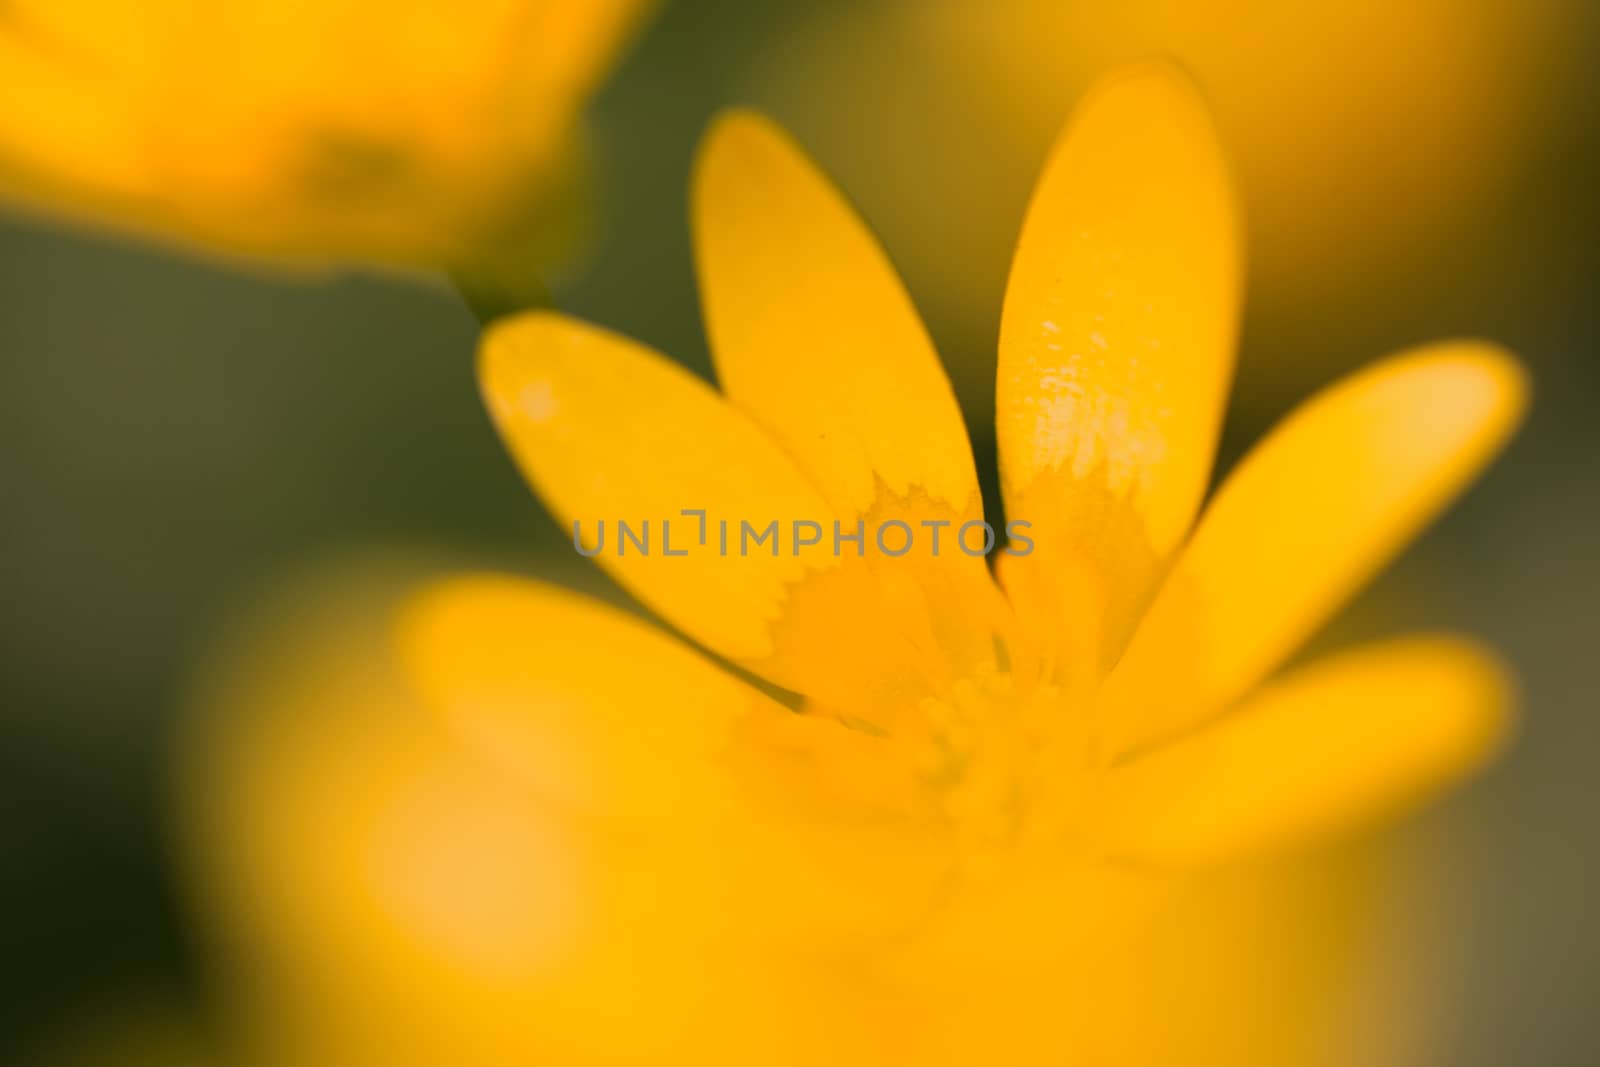 Abstract yellow flower macro shot by tadeush89